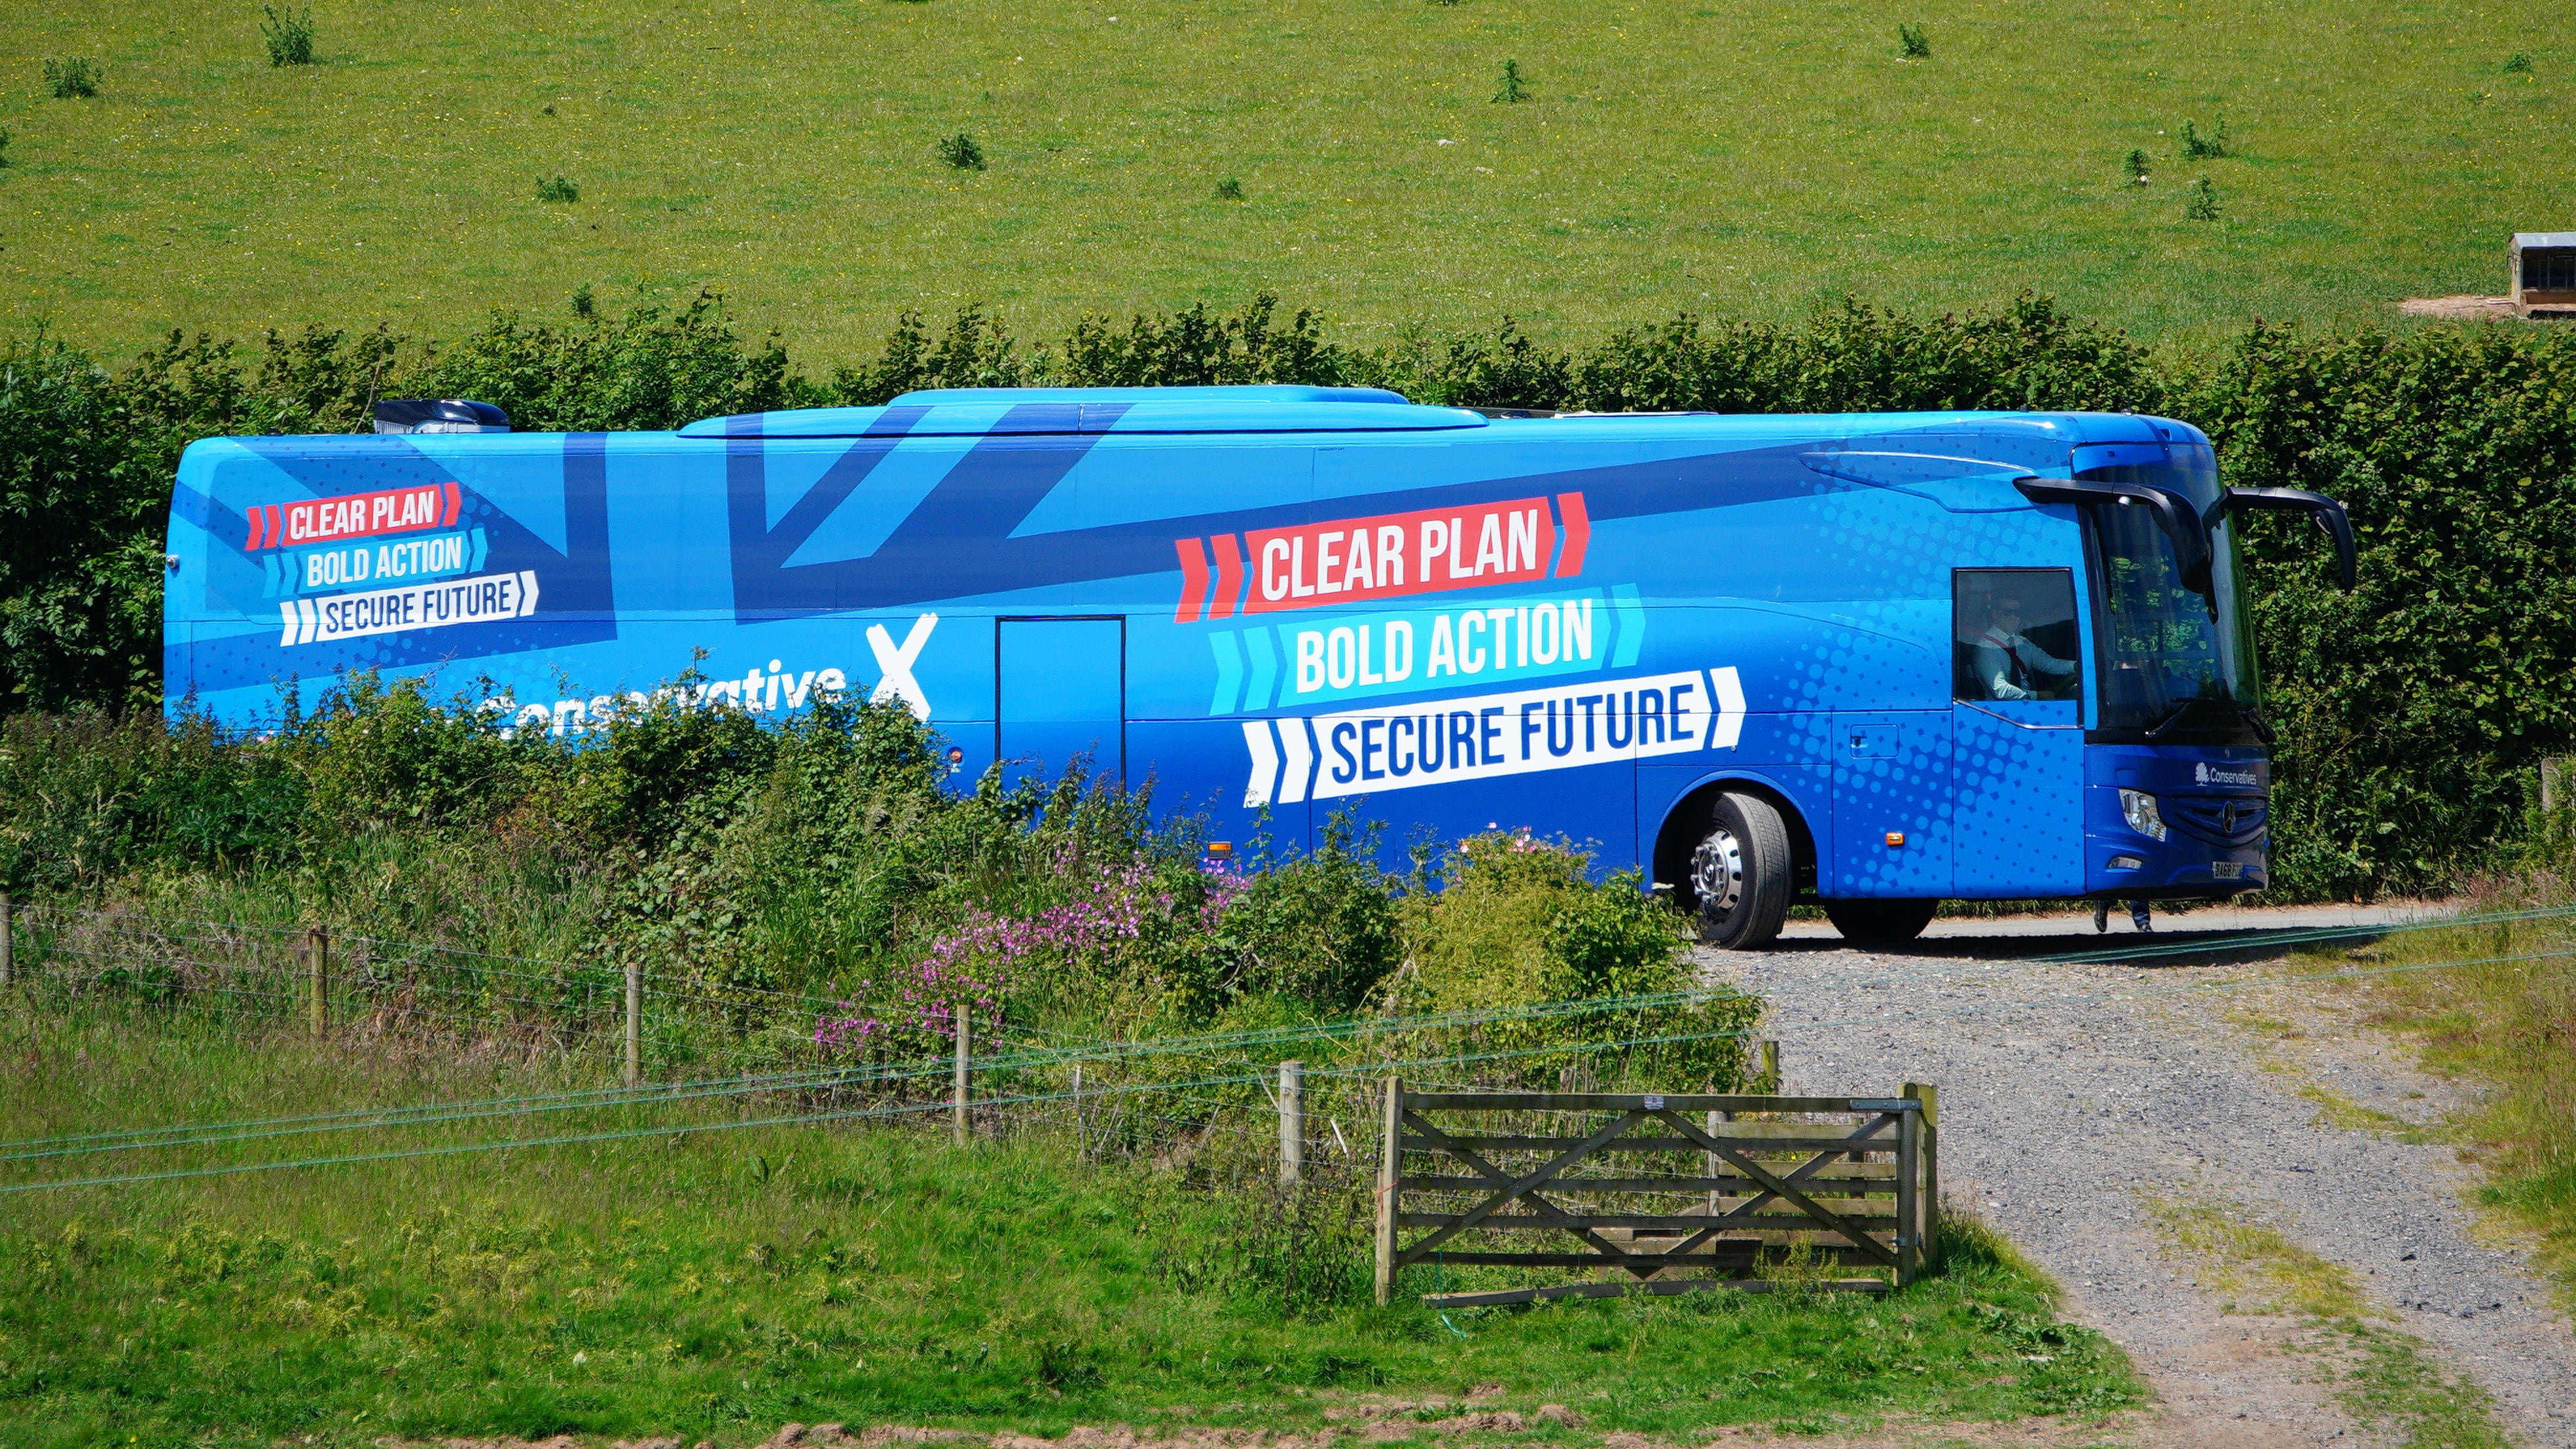 The Conservative Party battle bus